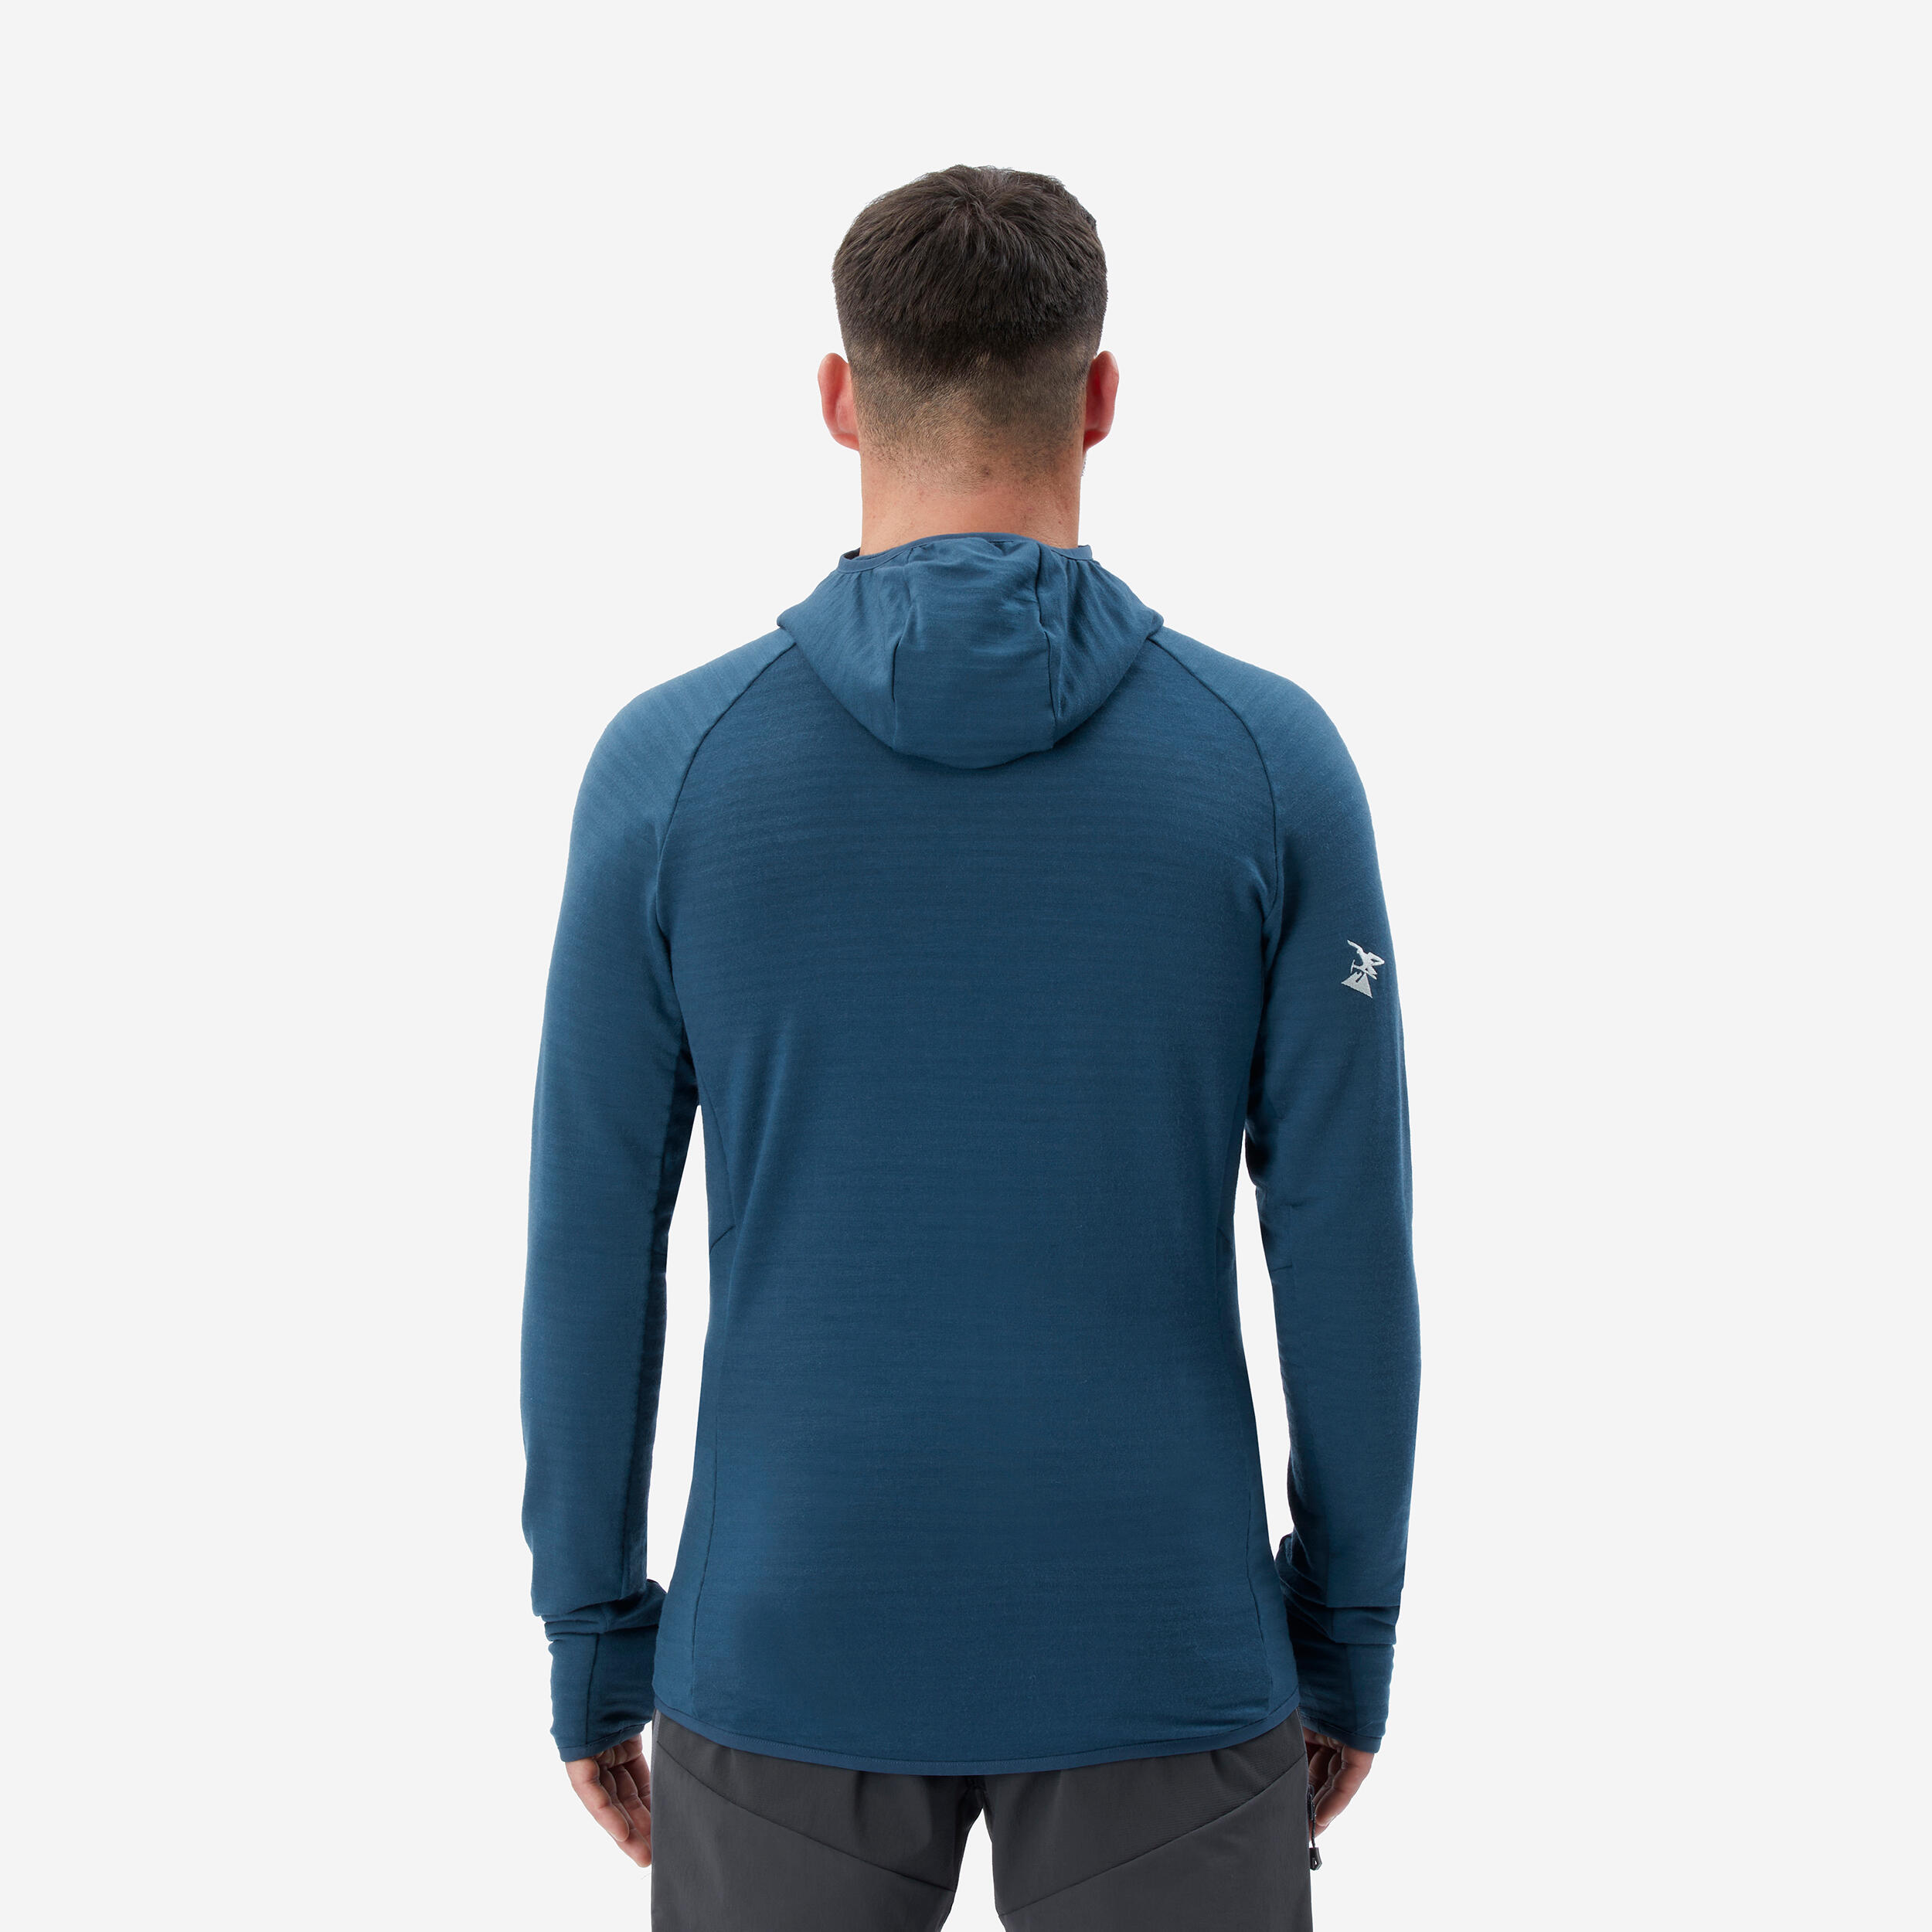 Men’s hooded pullover merino wool - MOUNTAINEERING - Blue 4/5